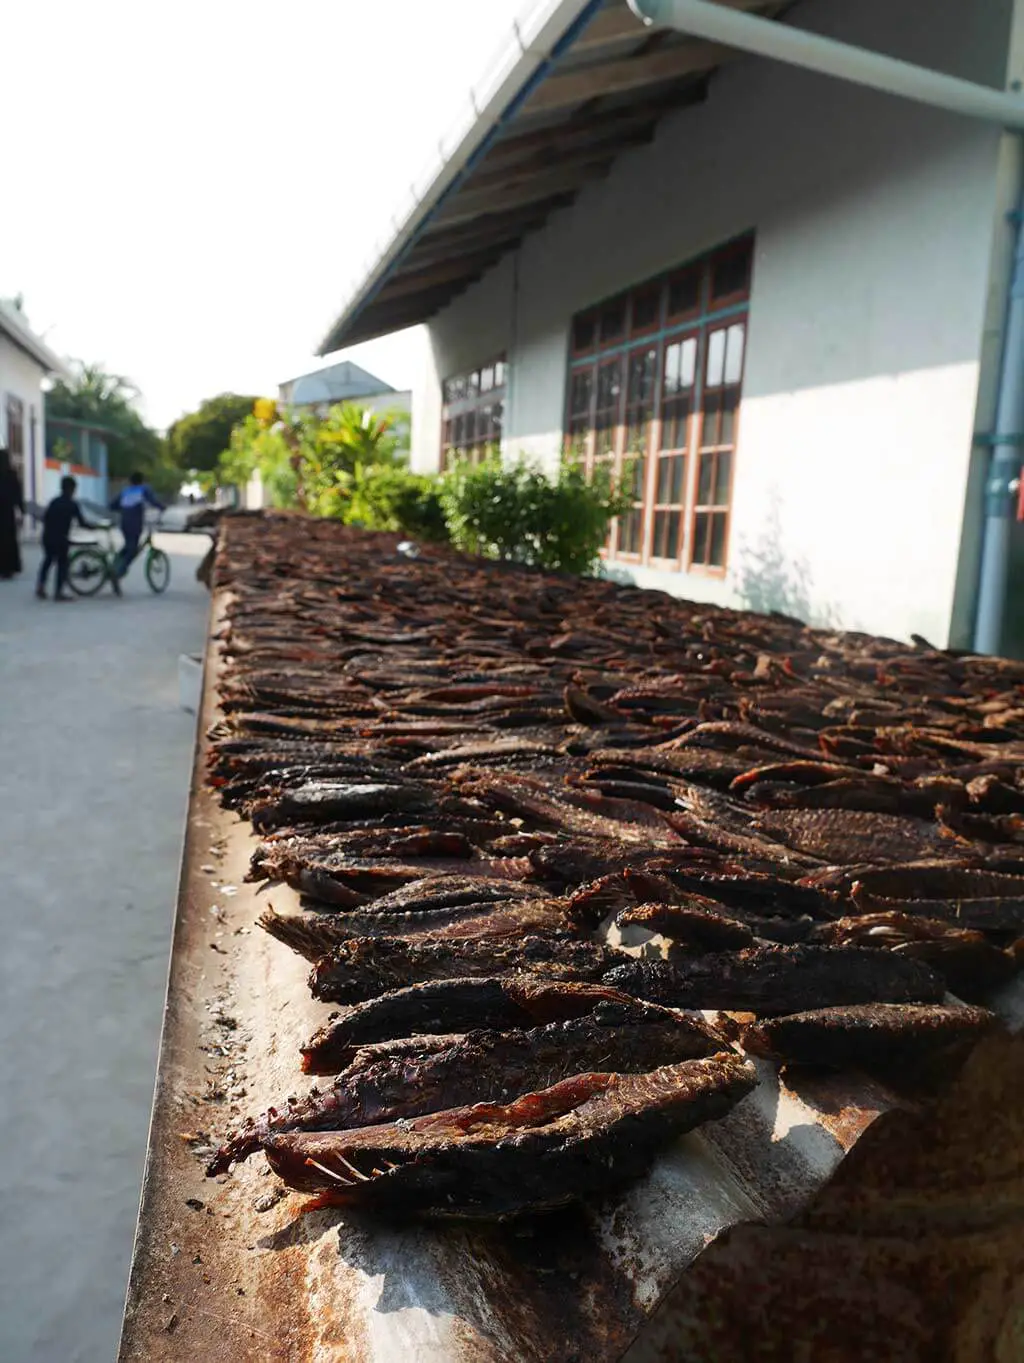 Smoked fish drying on Gaafaru, Maldives | Laugh Travel Eat